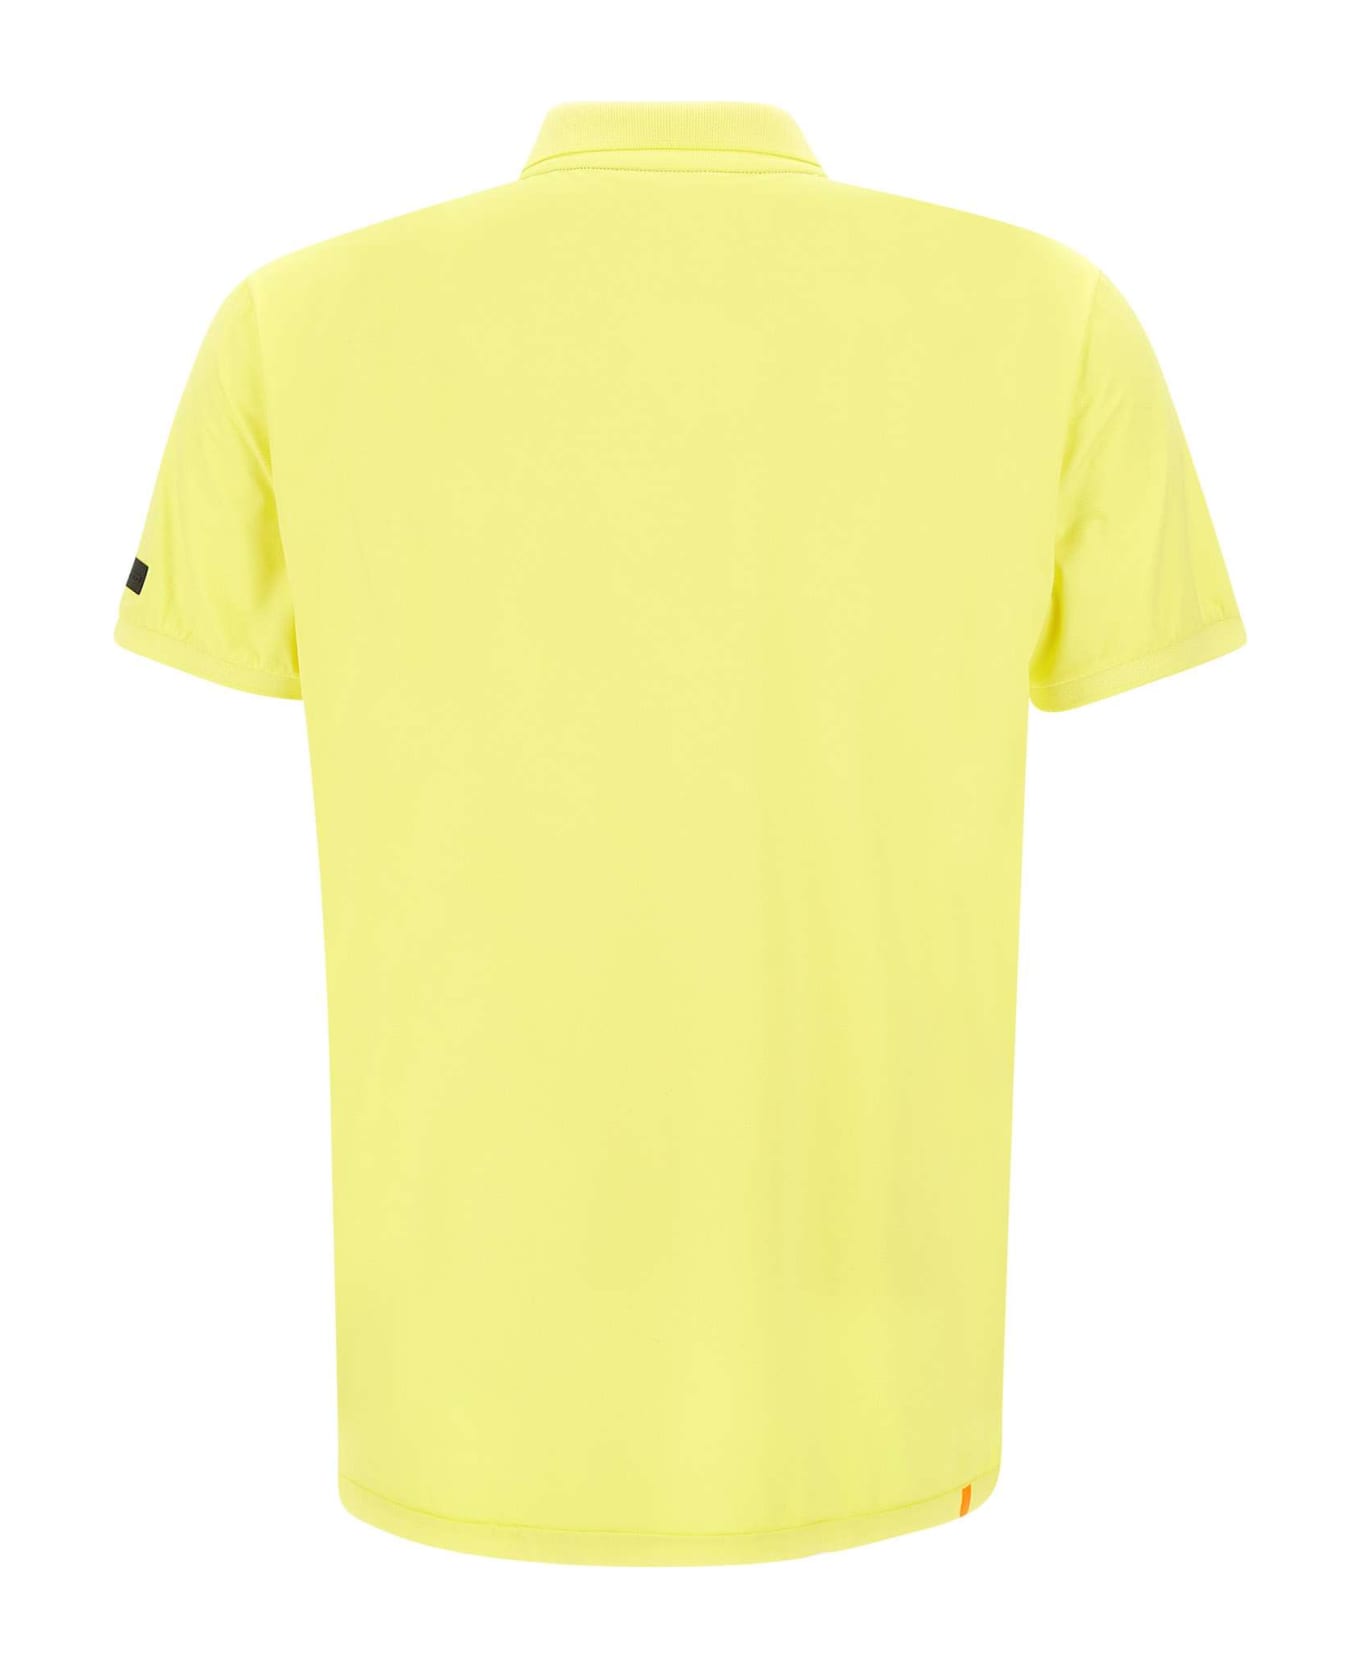 RRD - Roberto Ricci Design "gdy" Oxford Cotton T-shirt - YELLOW